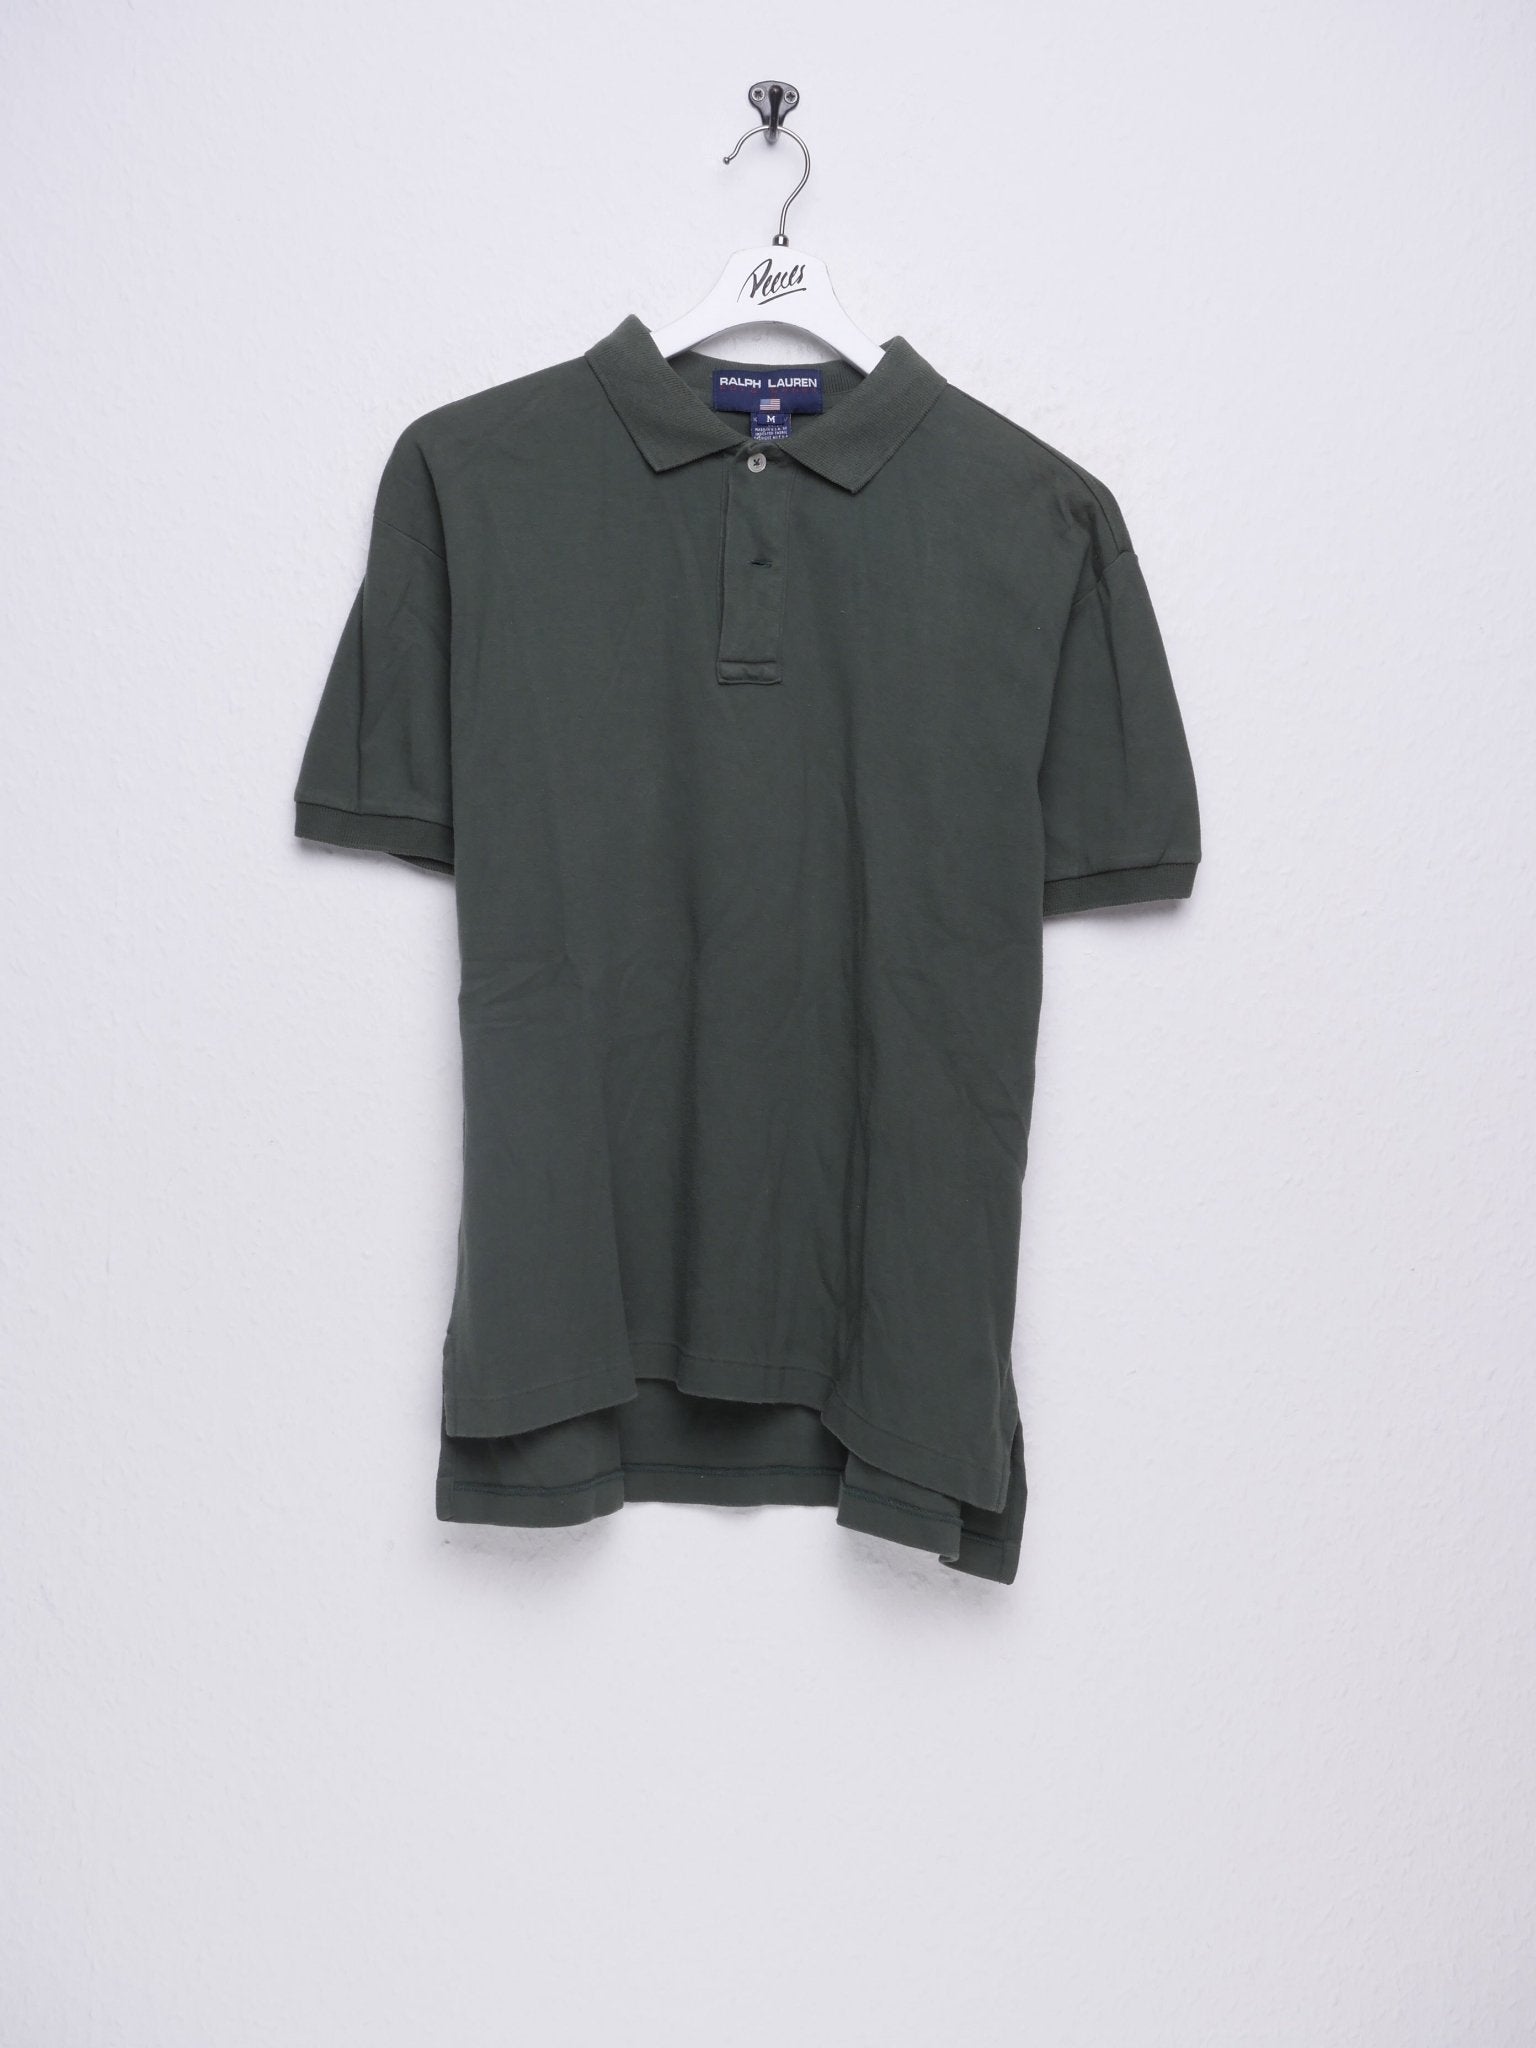 Polo Ralph Lauren Sport plain green Polo Shirt - Peeces